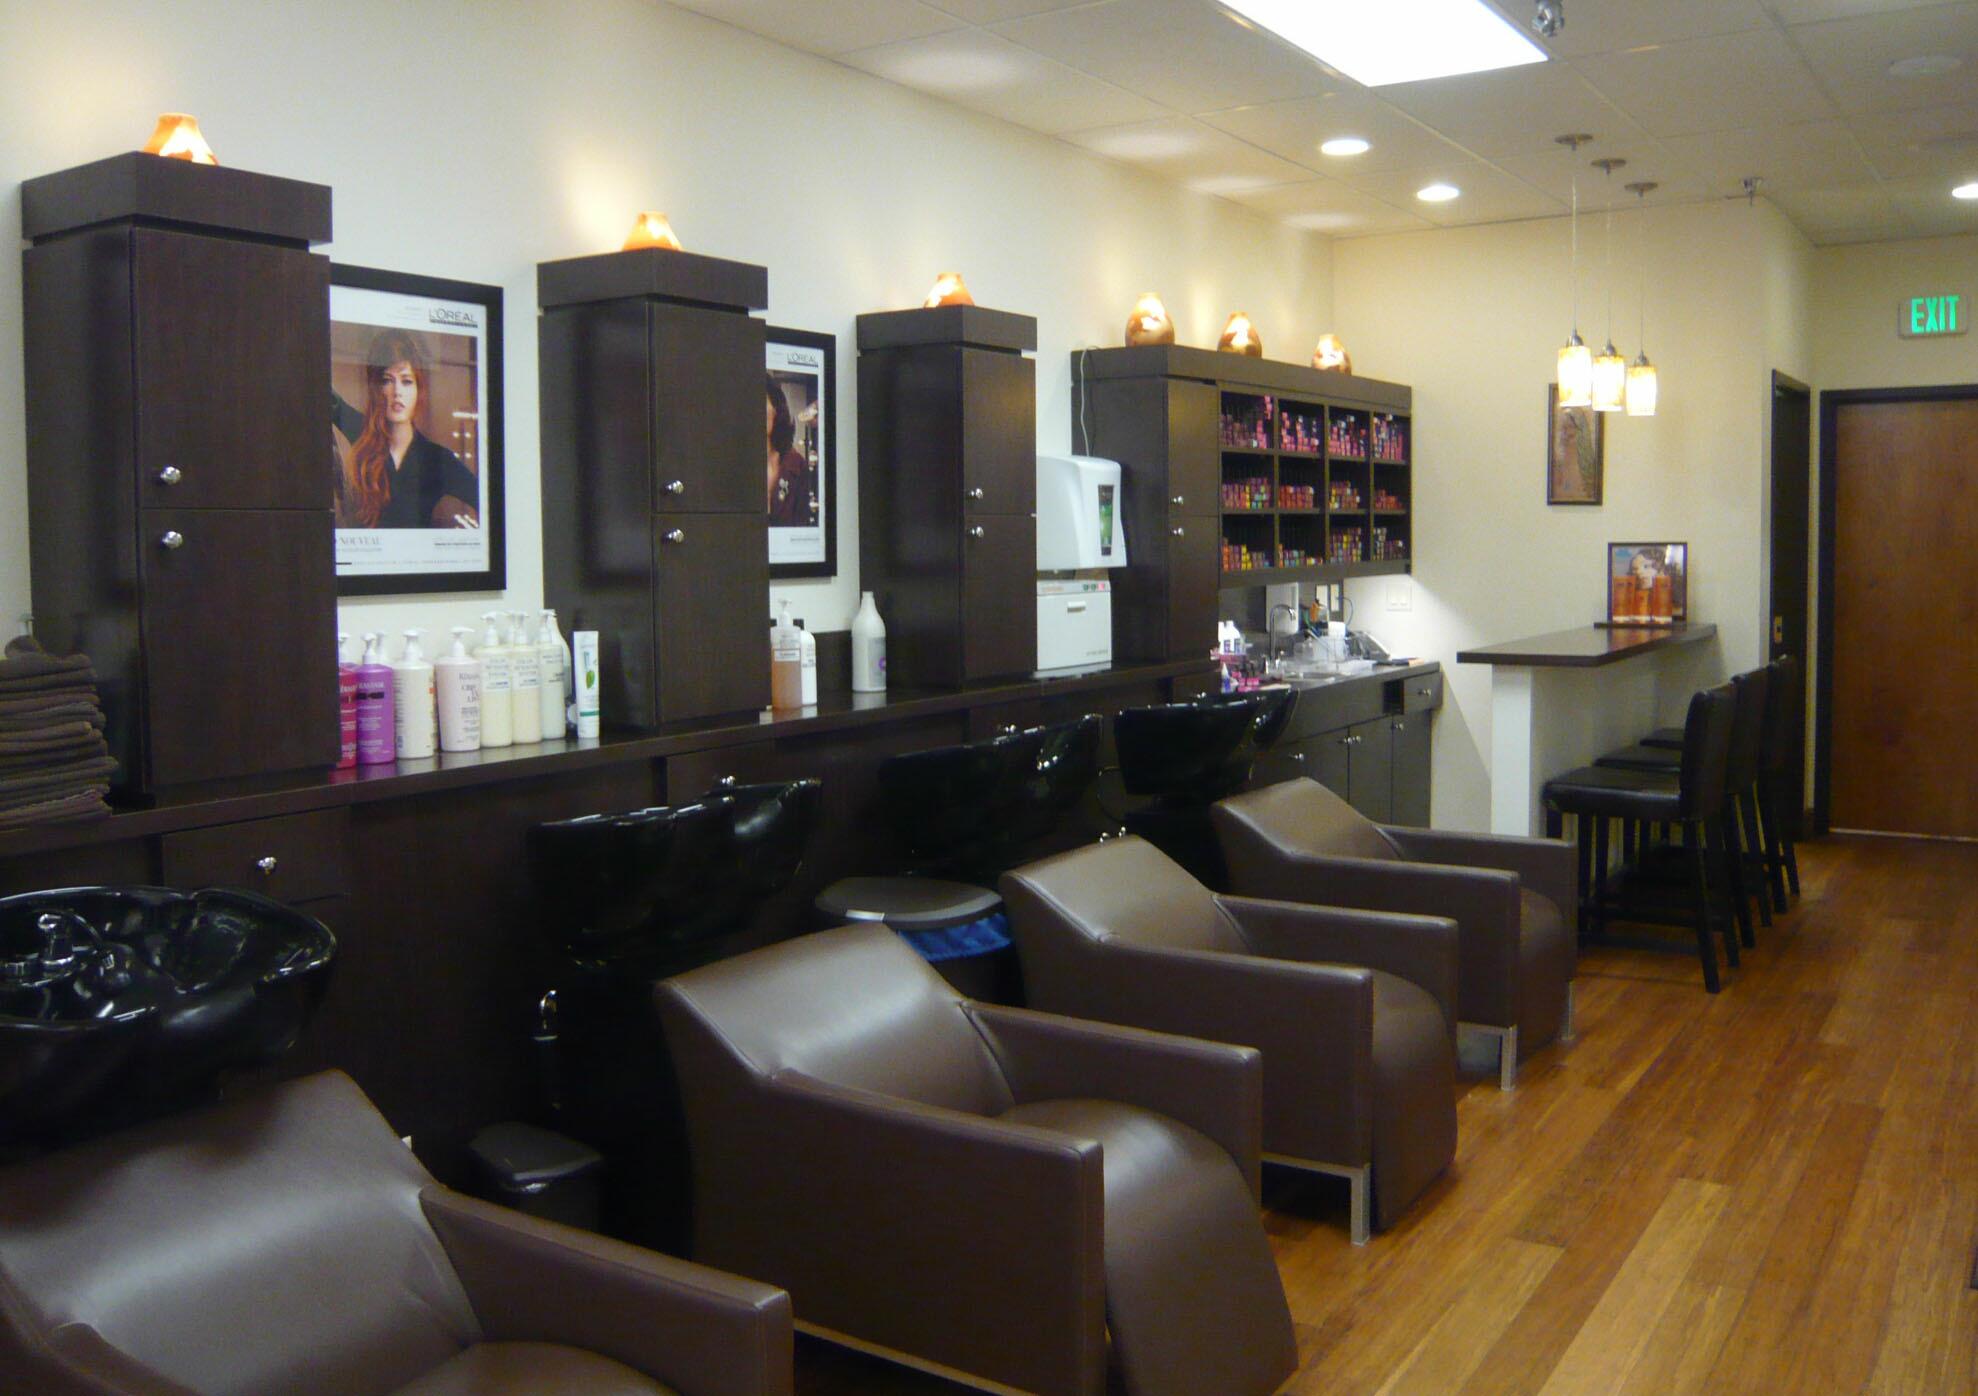 Salon Craft wash house, where hair salon clients receive luxurious shampoo, scalp massage, and hot towel service.